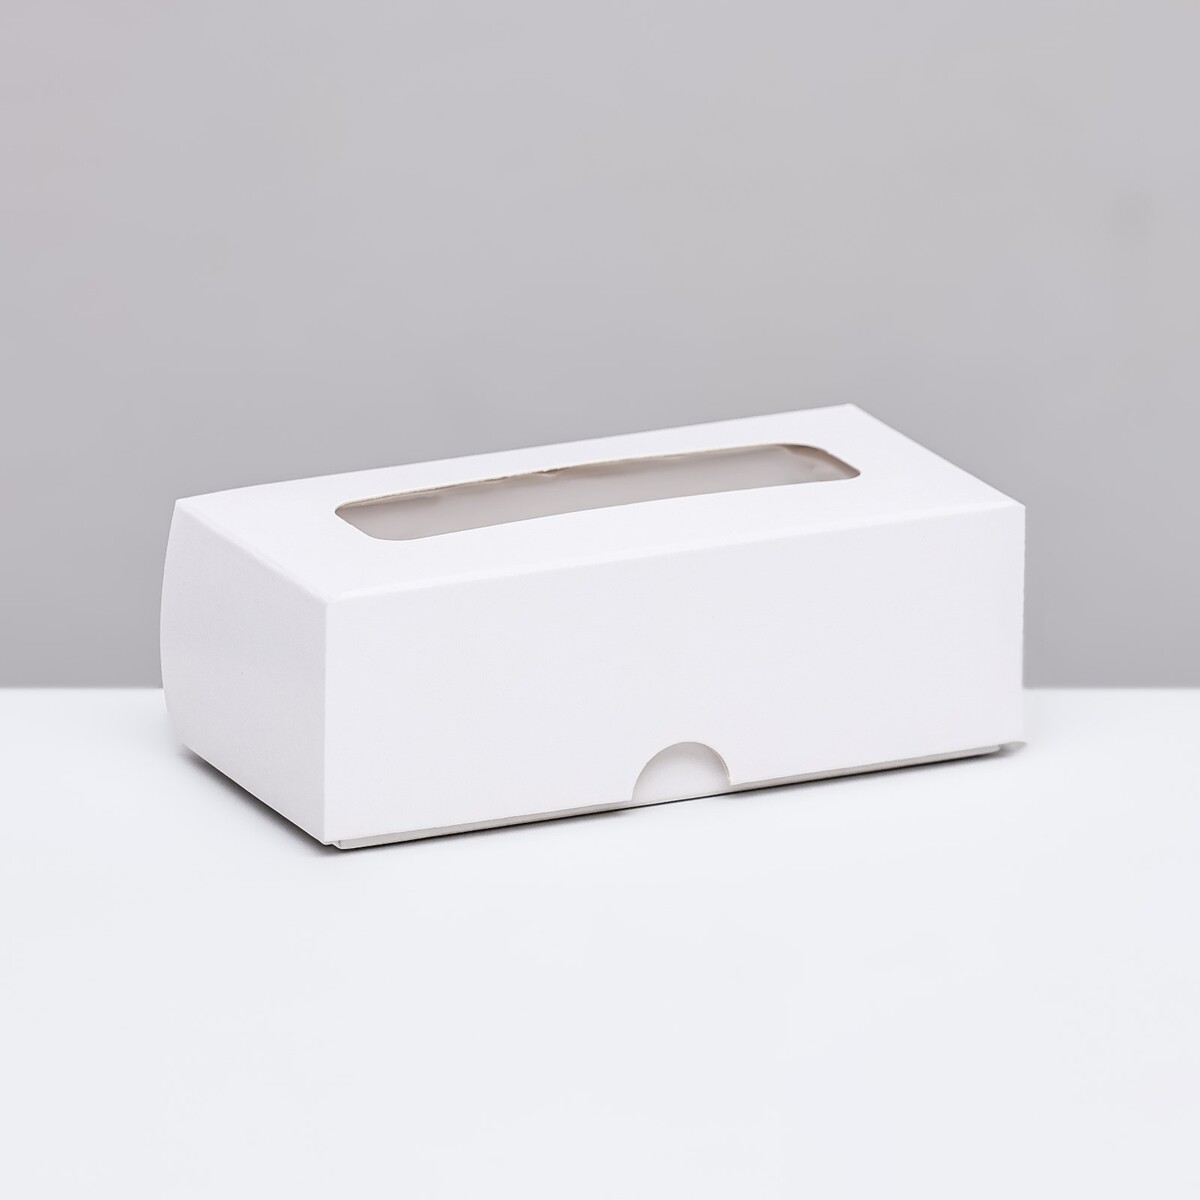 Коробка складная под 2 конфеты, белая, 5 х 10,5 х 3,5 см коробка складная под 5 конфет белая 5 х 22 х 3 5 см